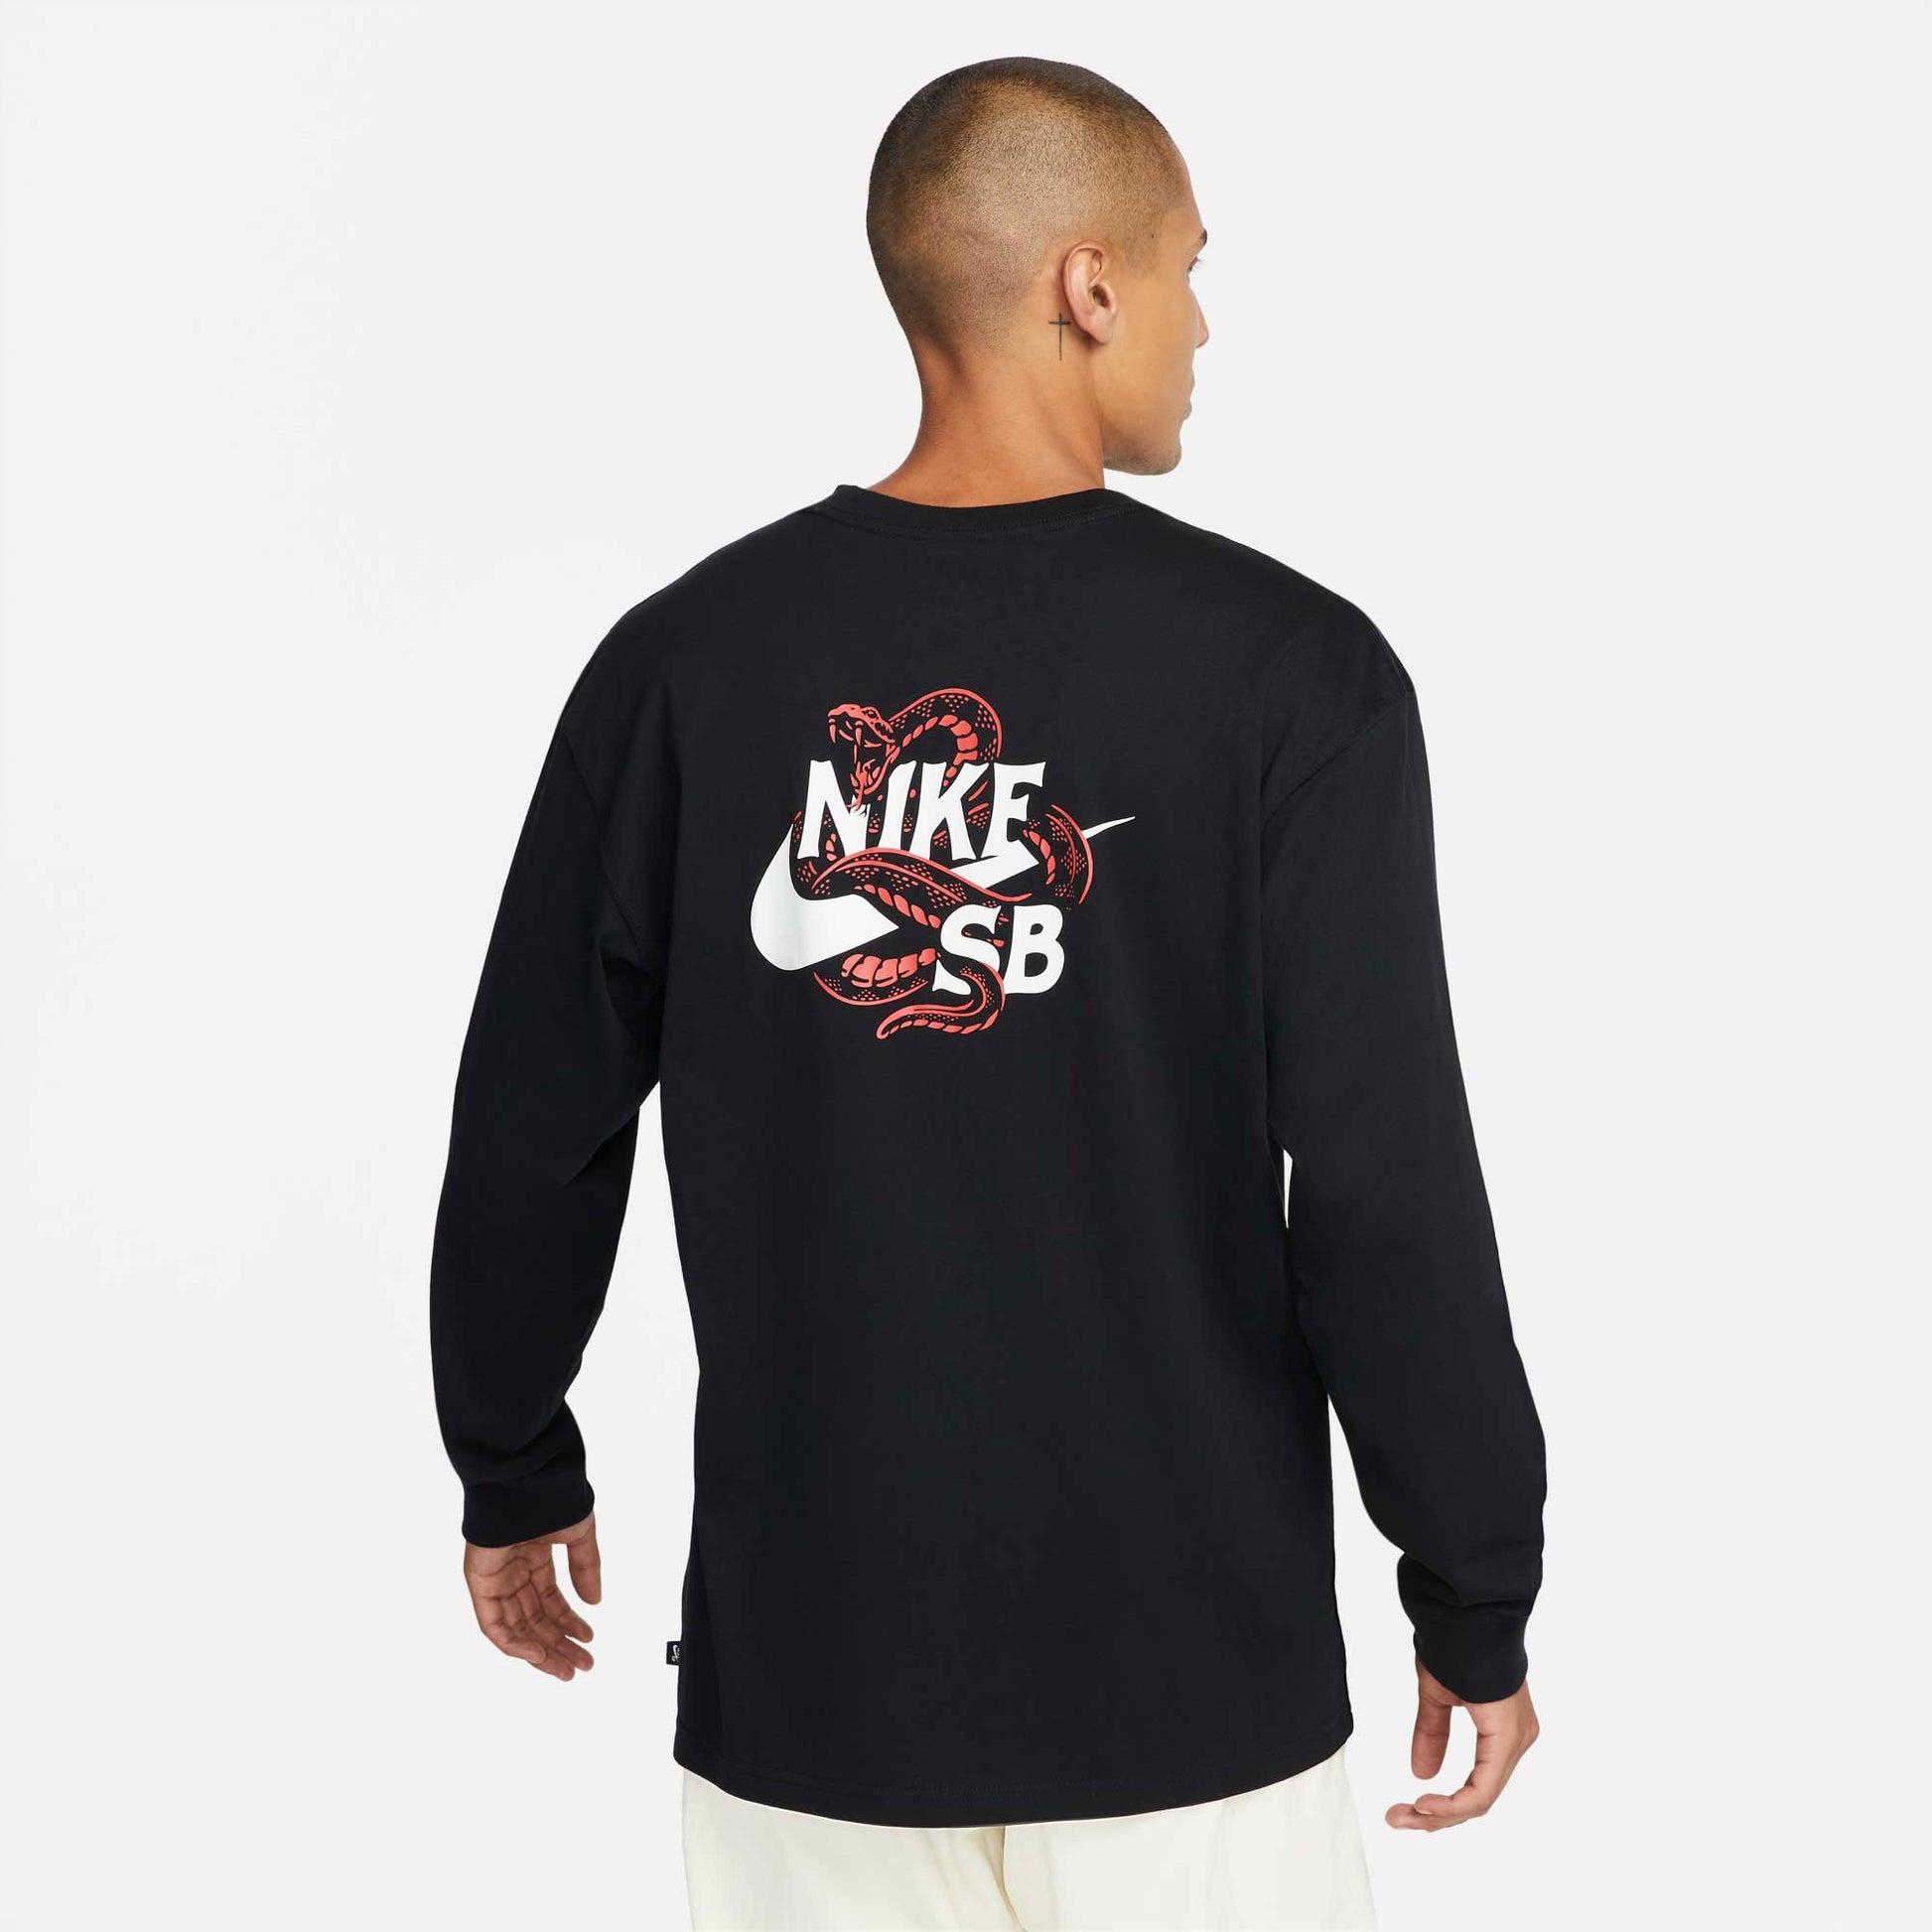 Nike SB Snake long sleeve tee, black - Tiki Room Skateboards - 3